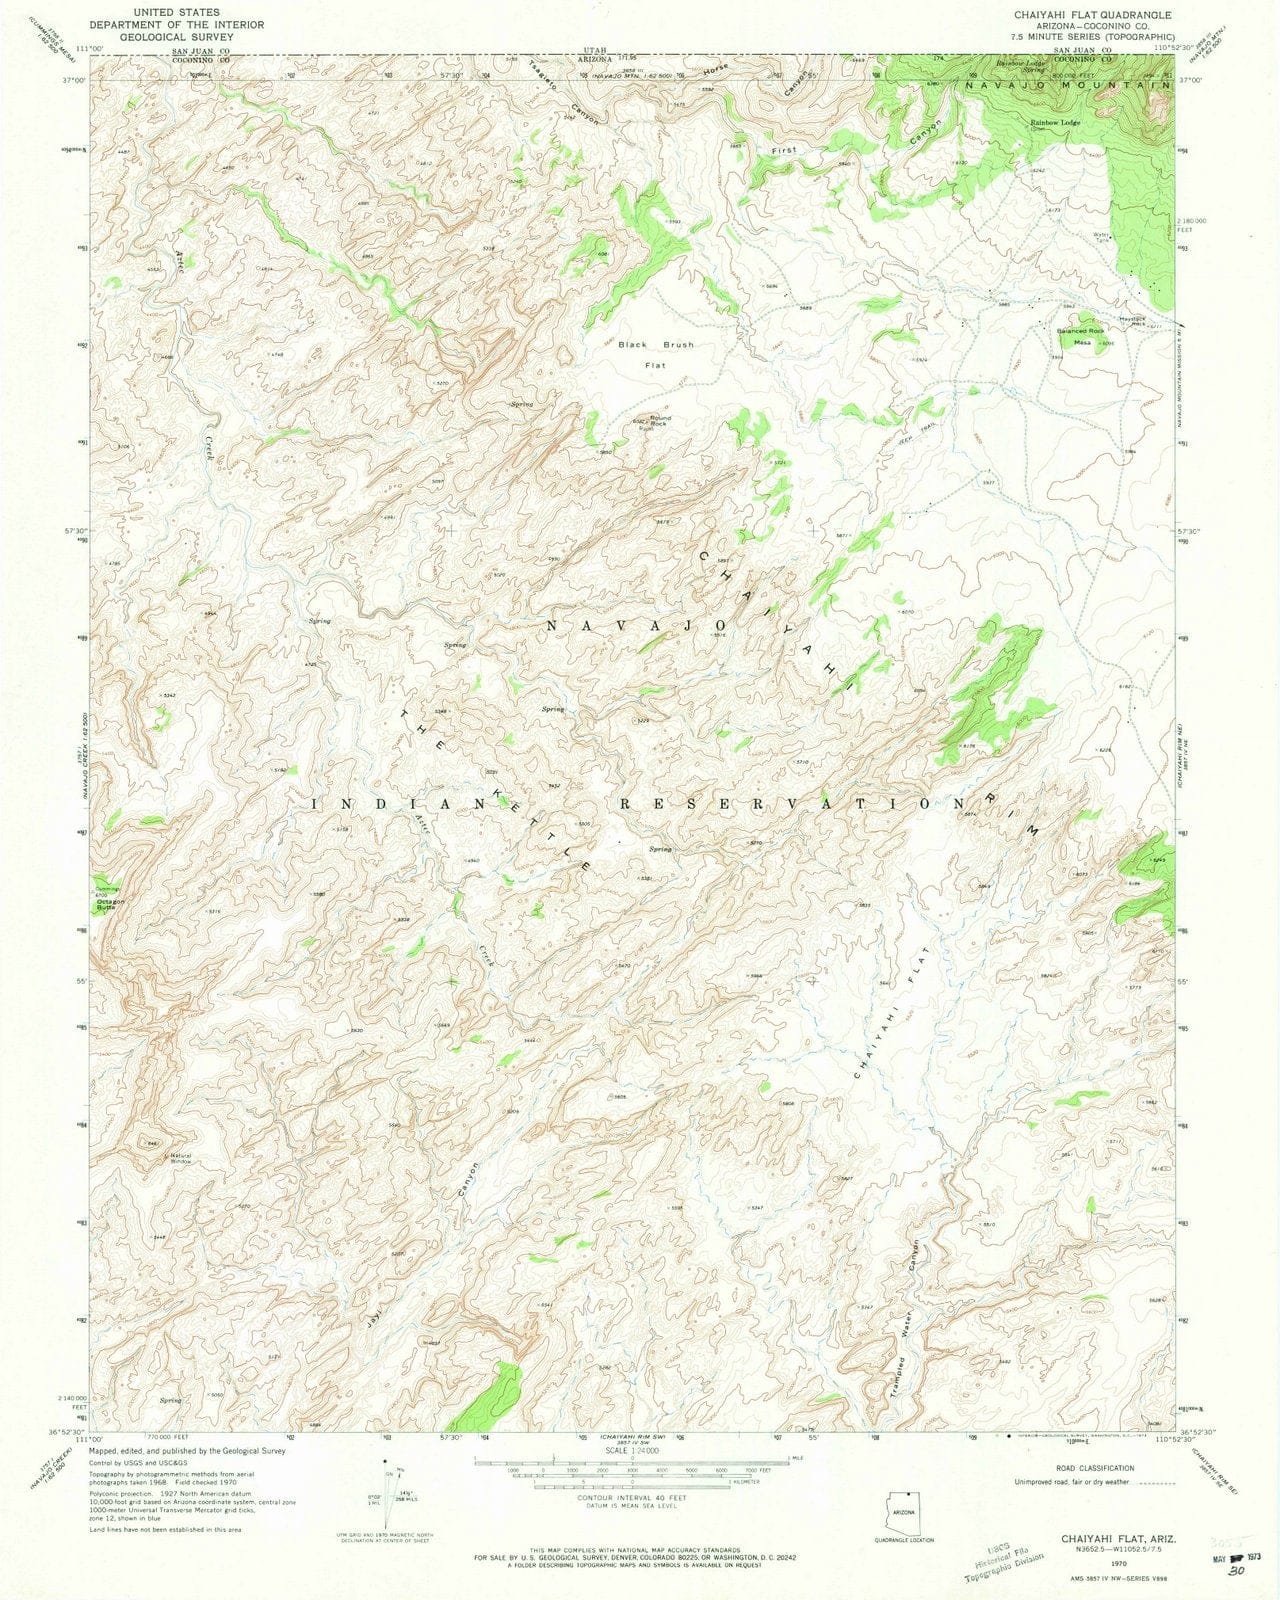 1970 Chaiyahi Flat, AZ - Arizona - USGS Topographic Map